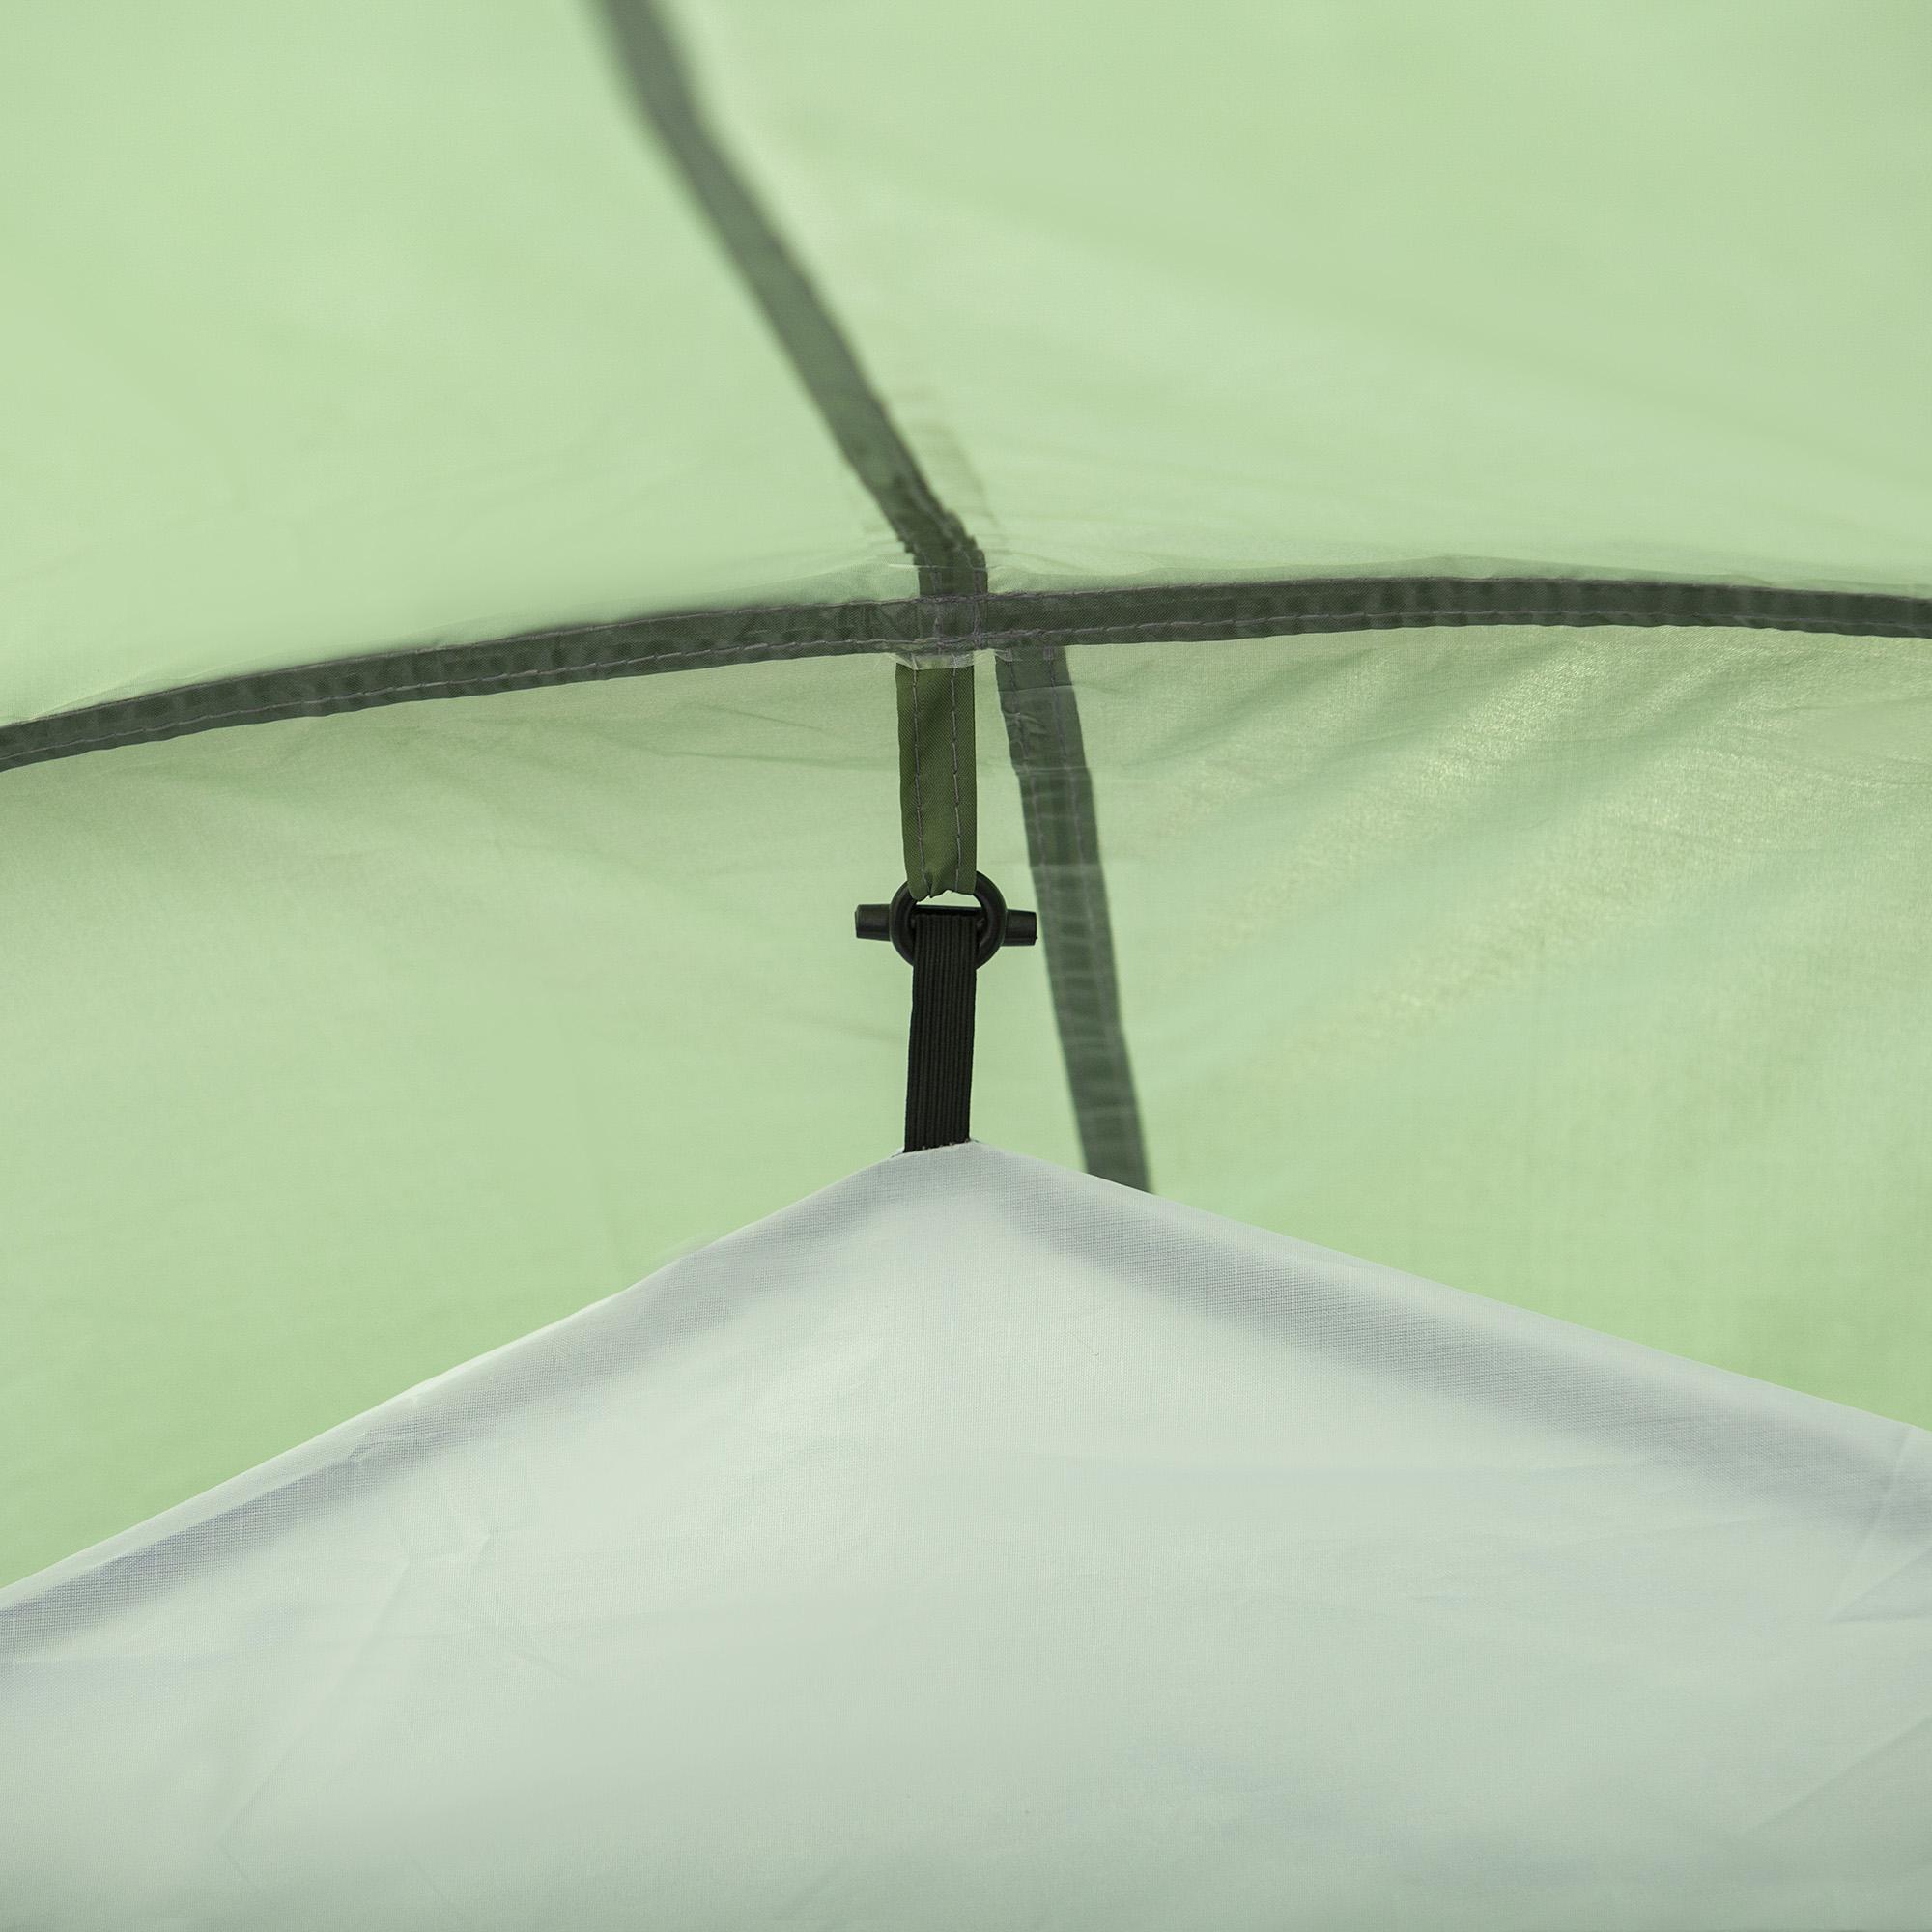 Tente de camping 2-3 pers. fibre verre polyester PE